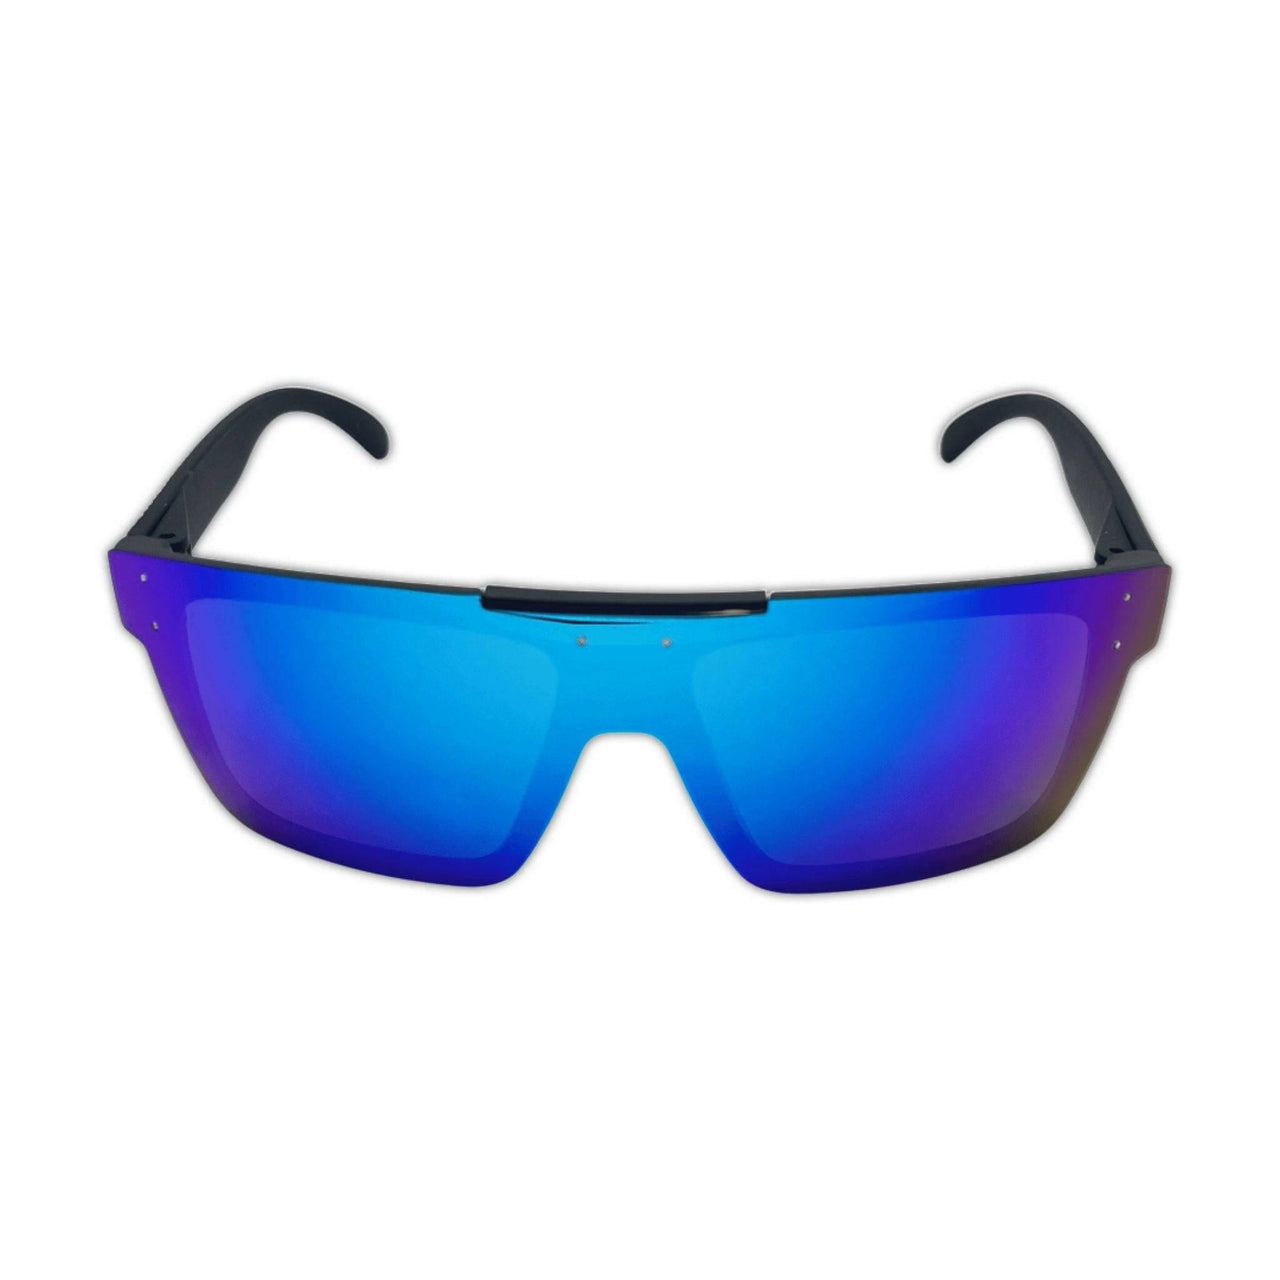 Flair USA Blue Polarized Lens Sunglasses - Rebel Reaper Clothing Company Sunglasses